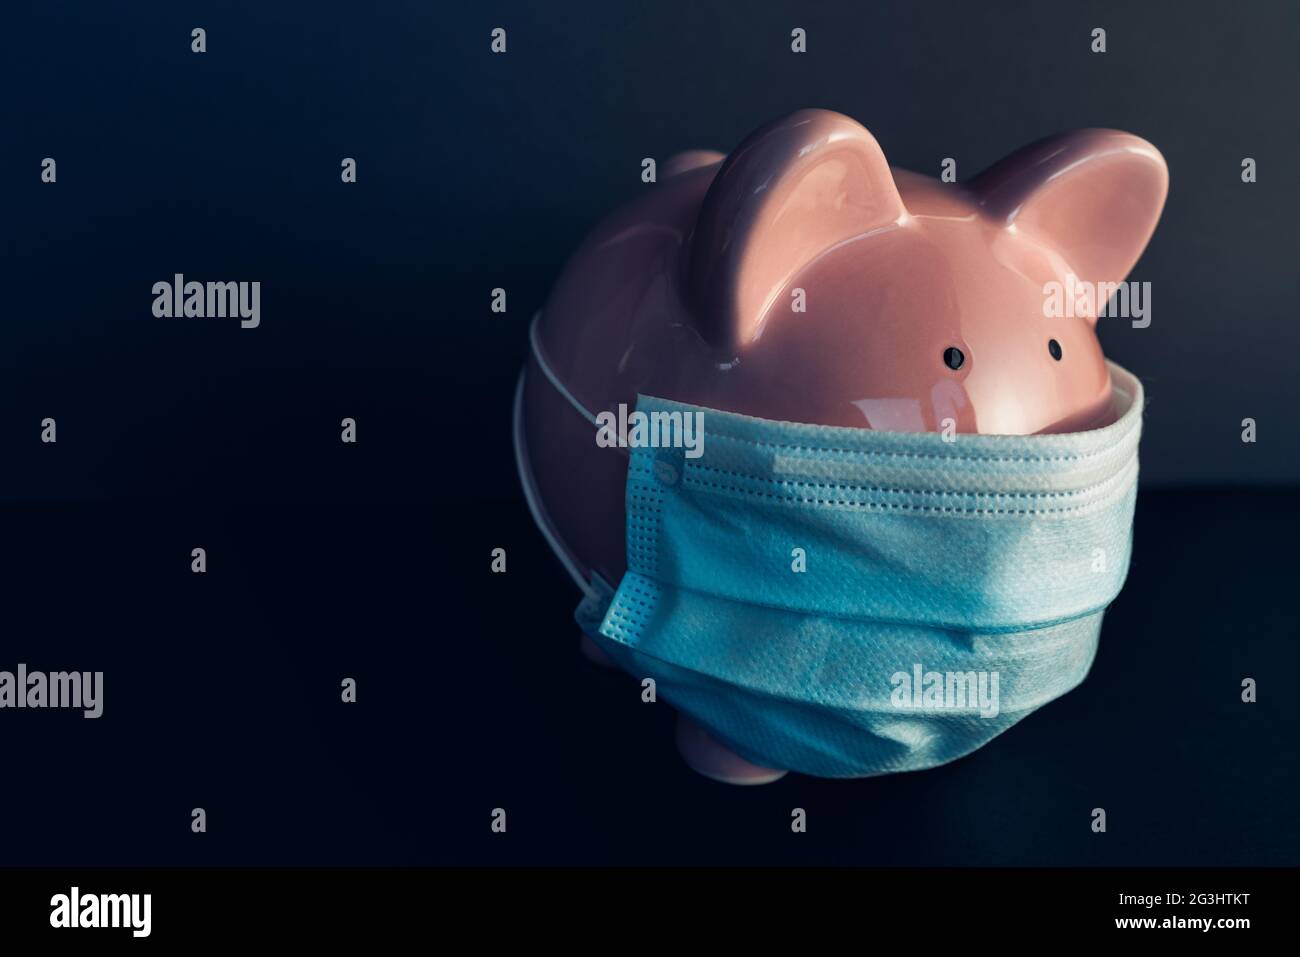 Economía mundial durante la pandemia del coronavirus. Banco piggy con mascarilla quirúrgica. Crisis financiera, concepto bancario. Foto de stock